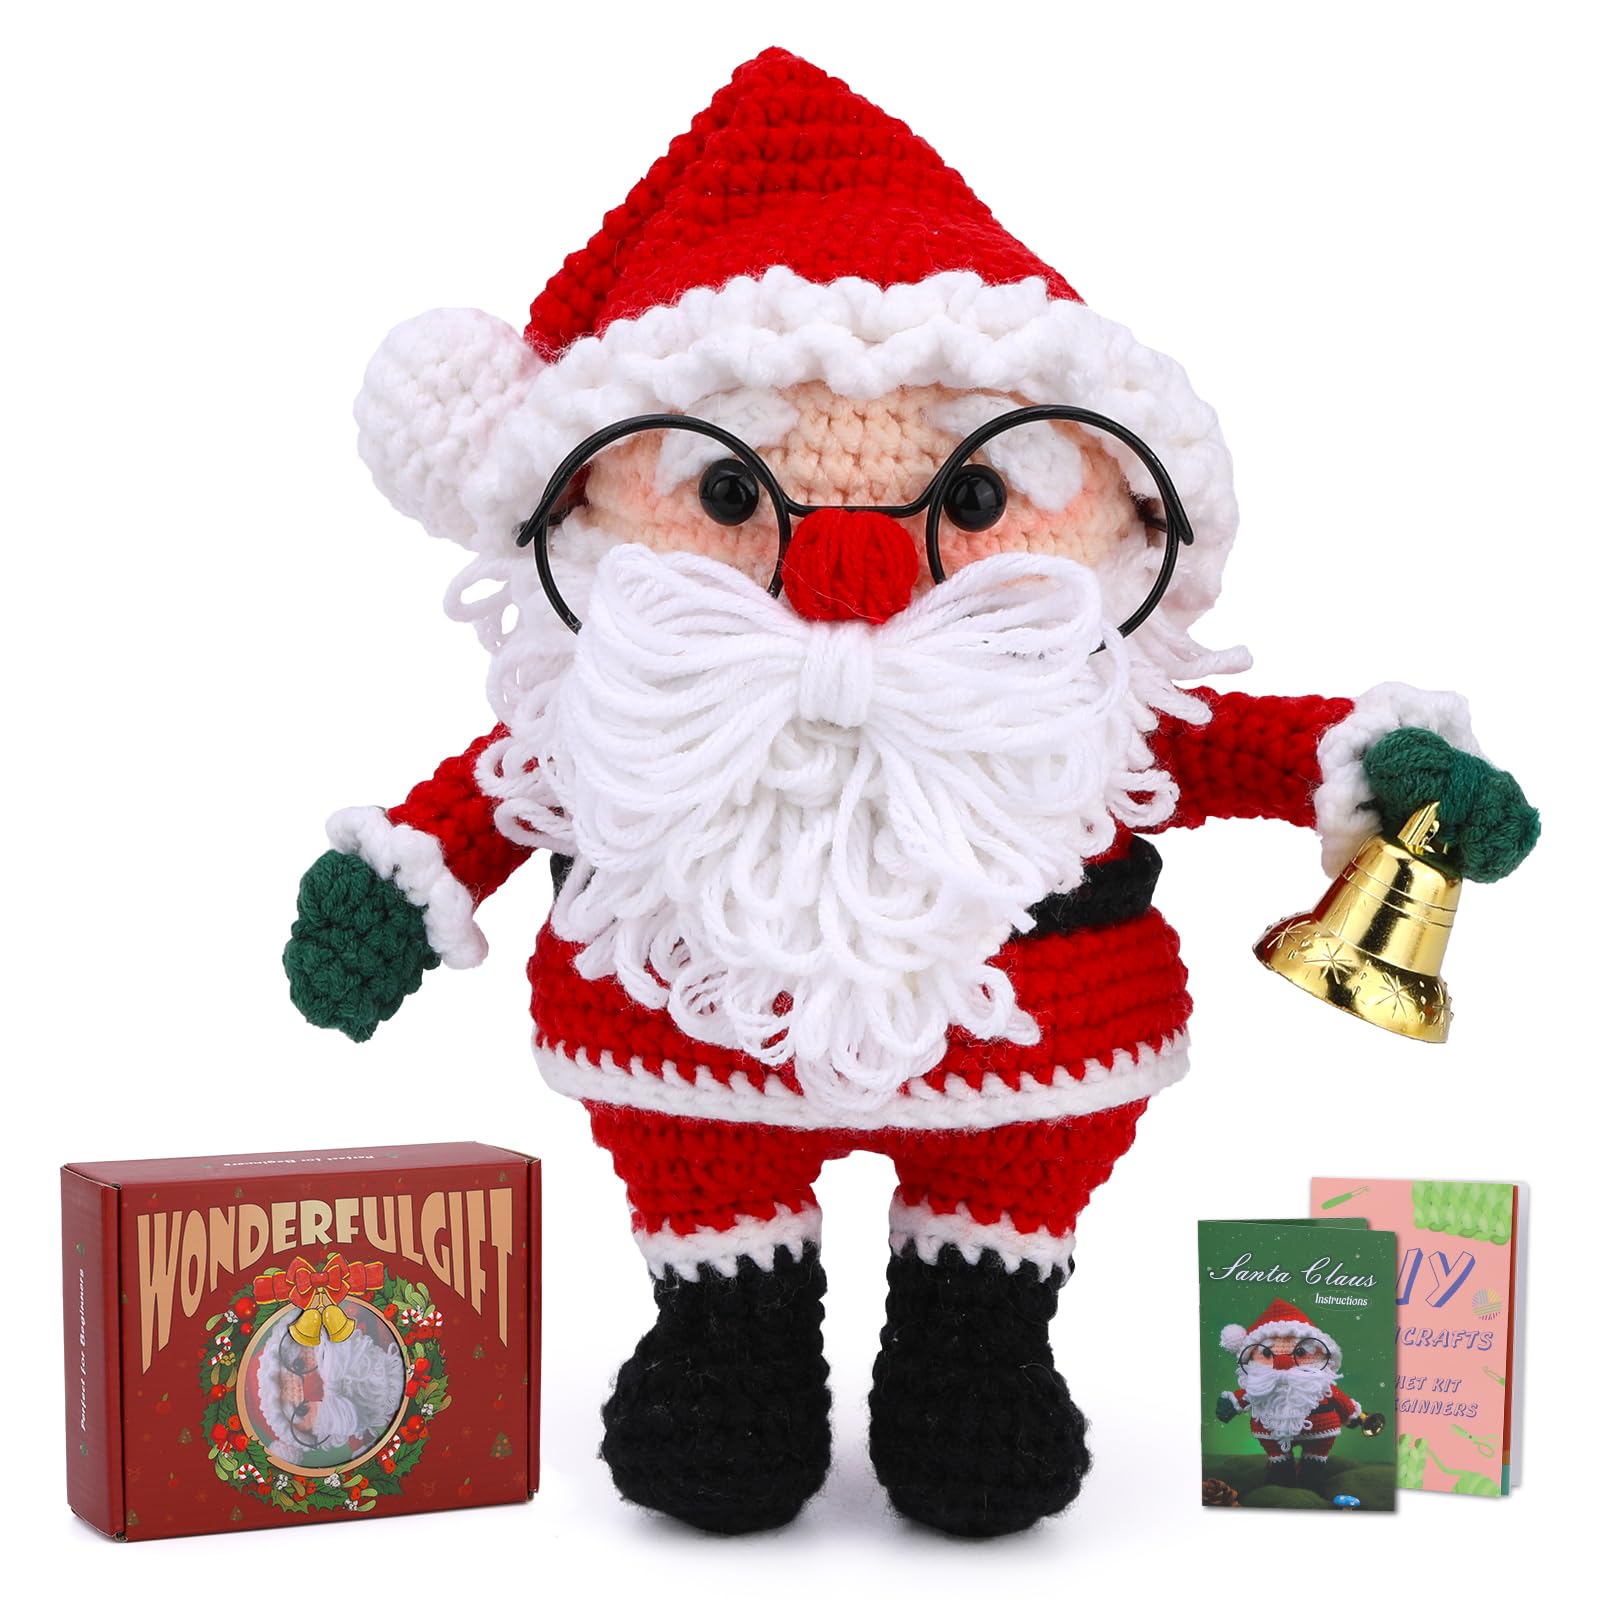 Vogart Crafts 'Christmas Crochet Kit' # 3201 Santa Claus